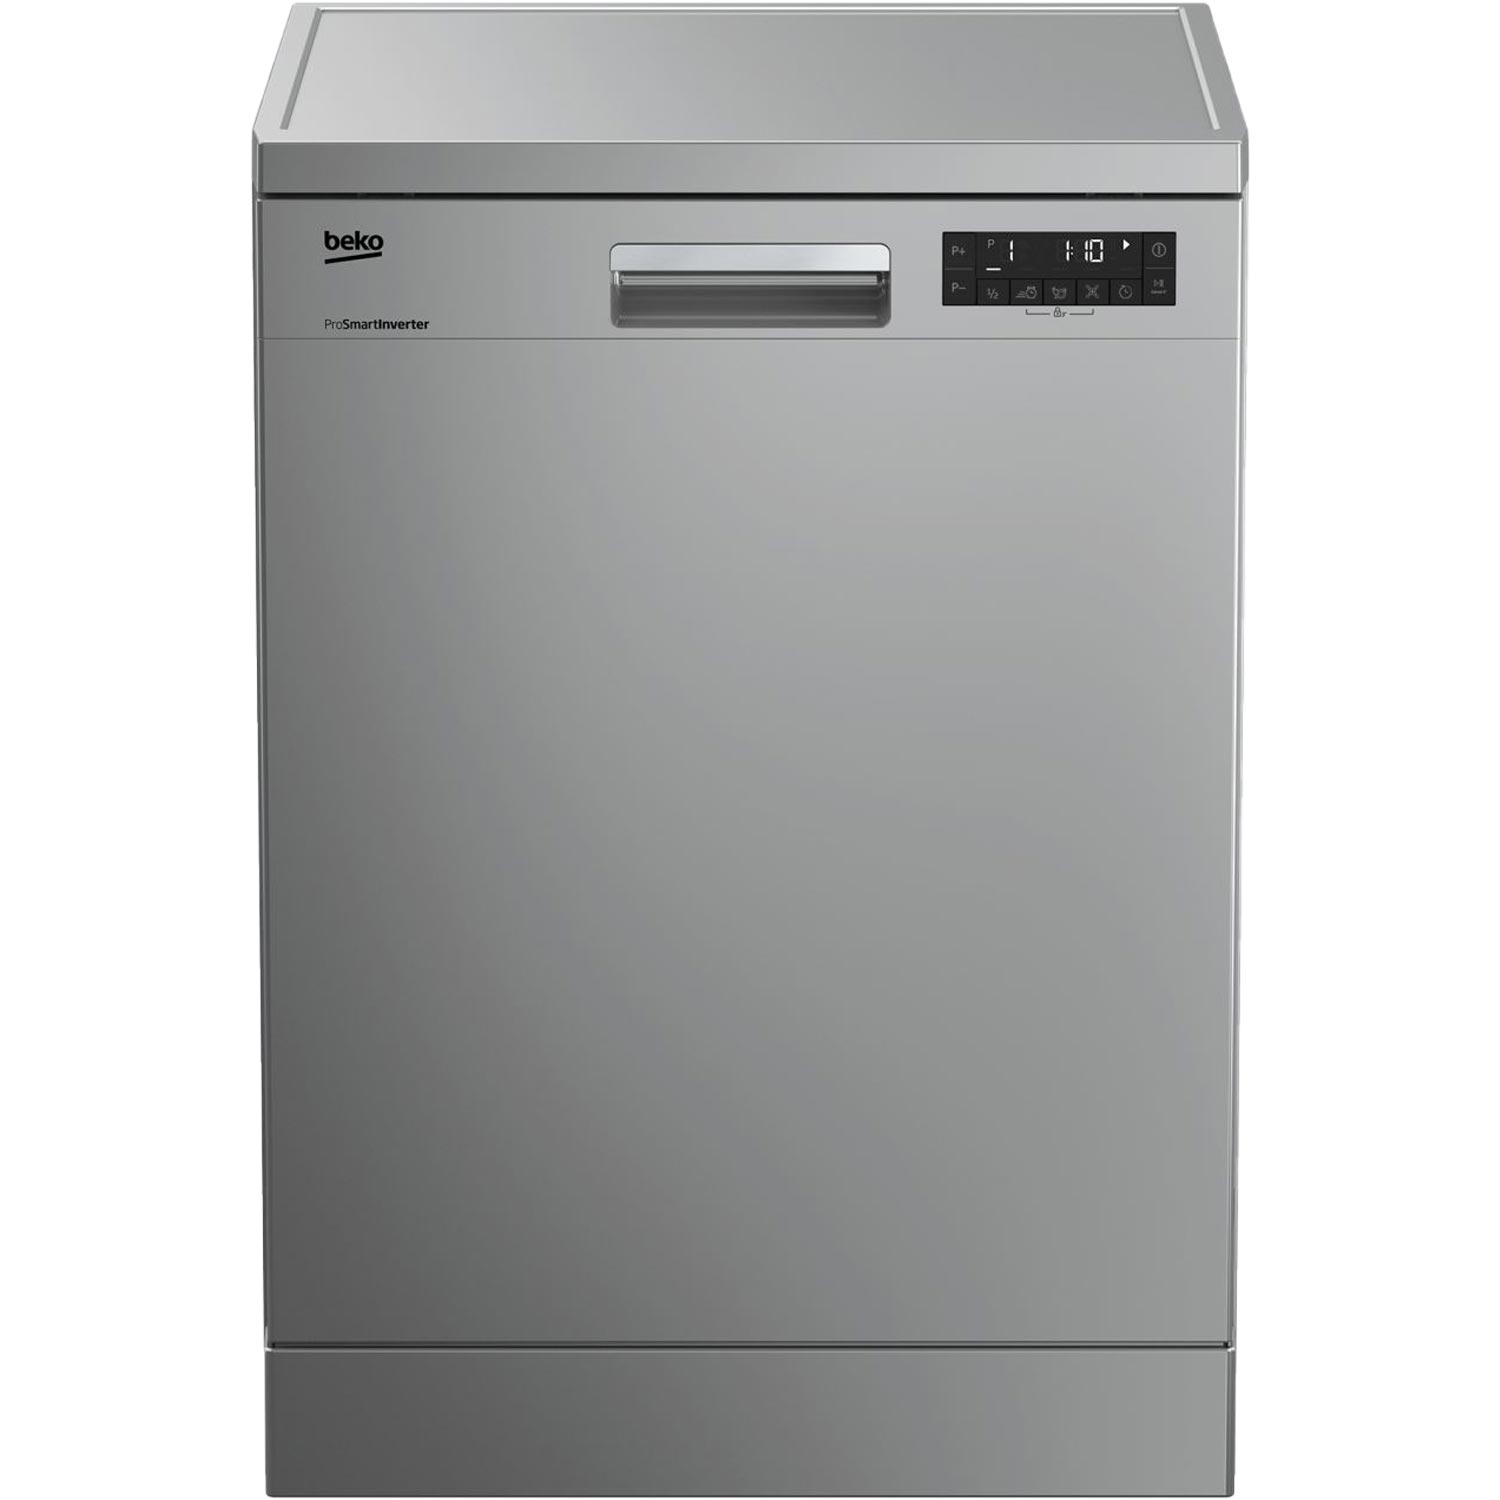 ماشین ظرفشویی بکو مدل DFN28422S - قیمت ظرفشویی بکو 28422s - بکو لند